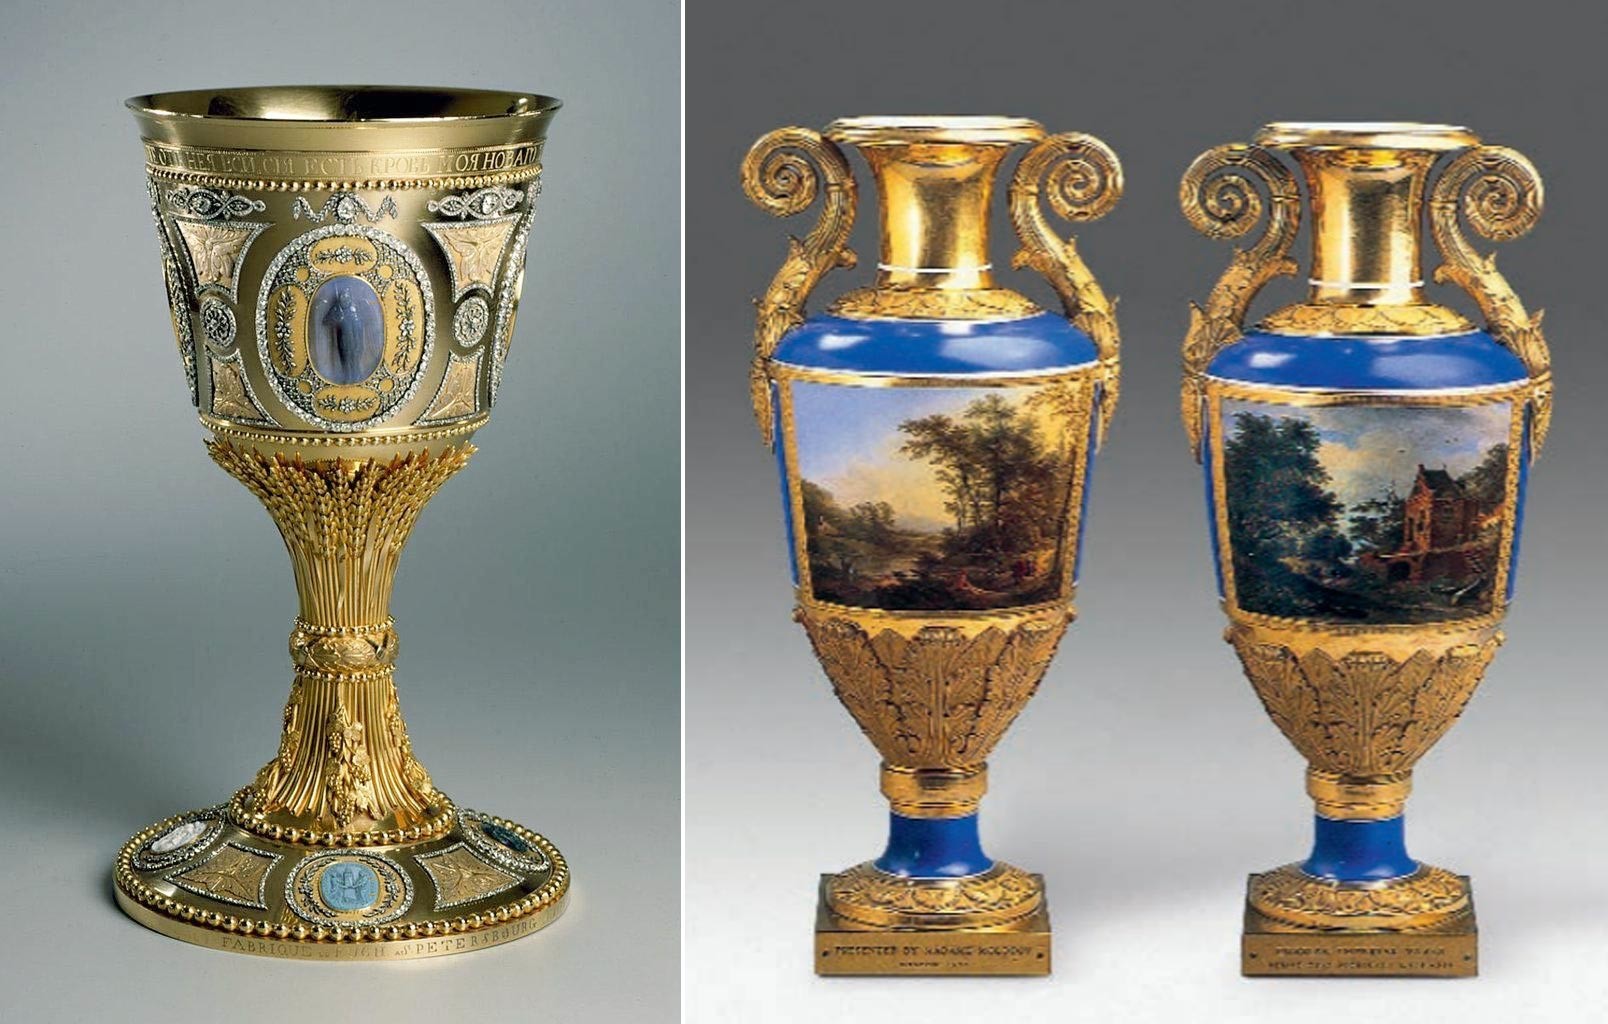 Vasos de porcelana imperial.

